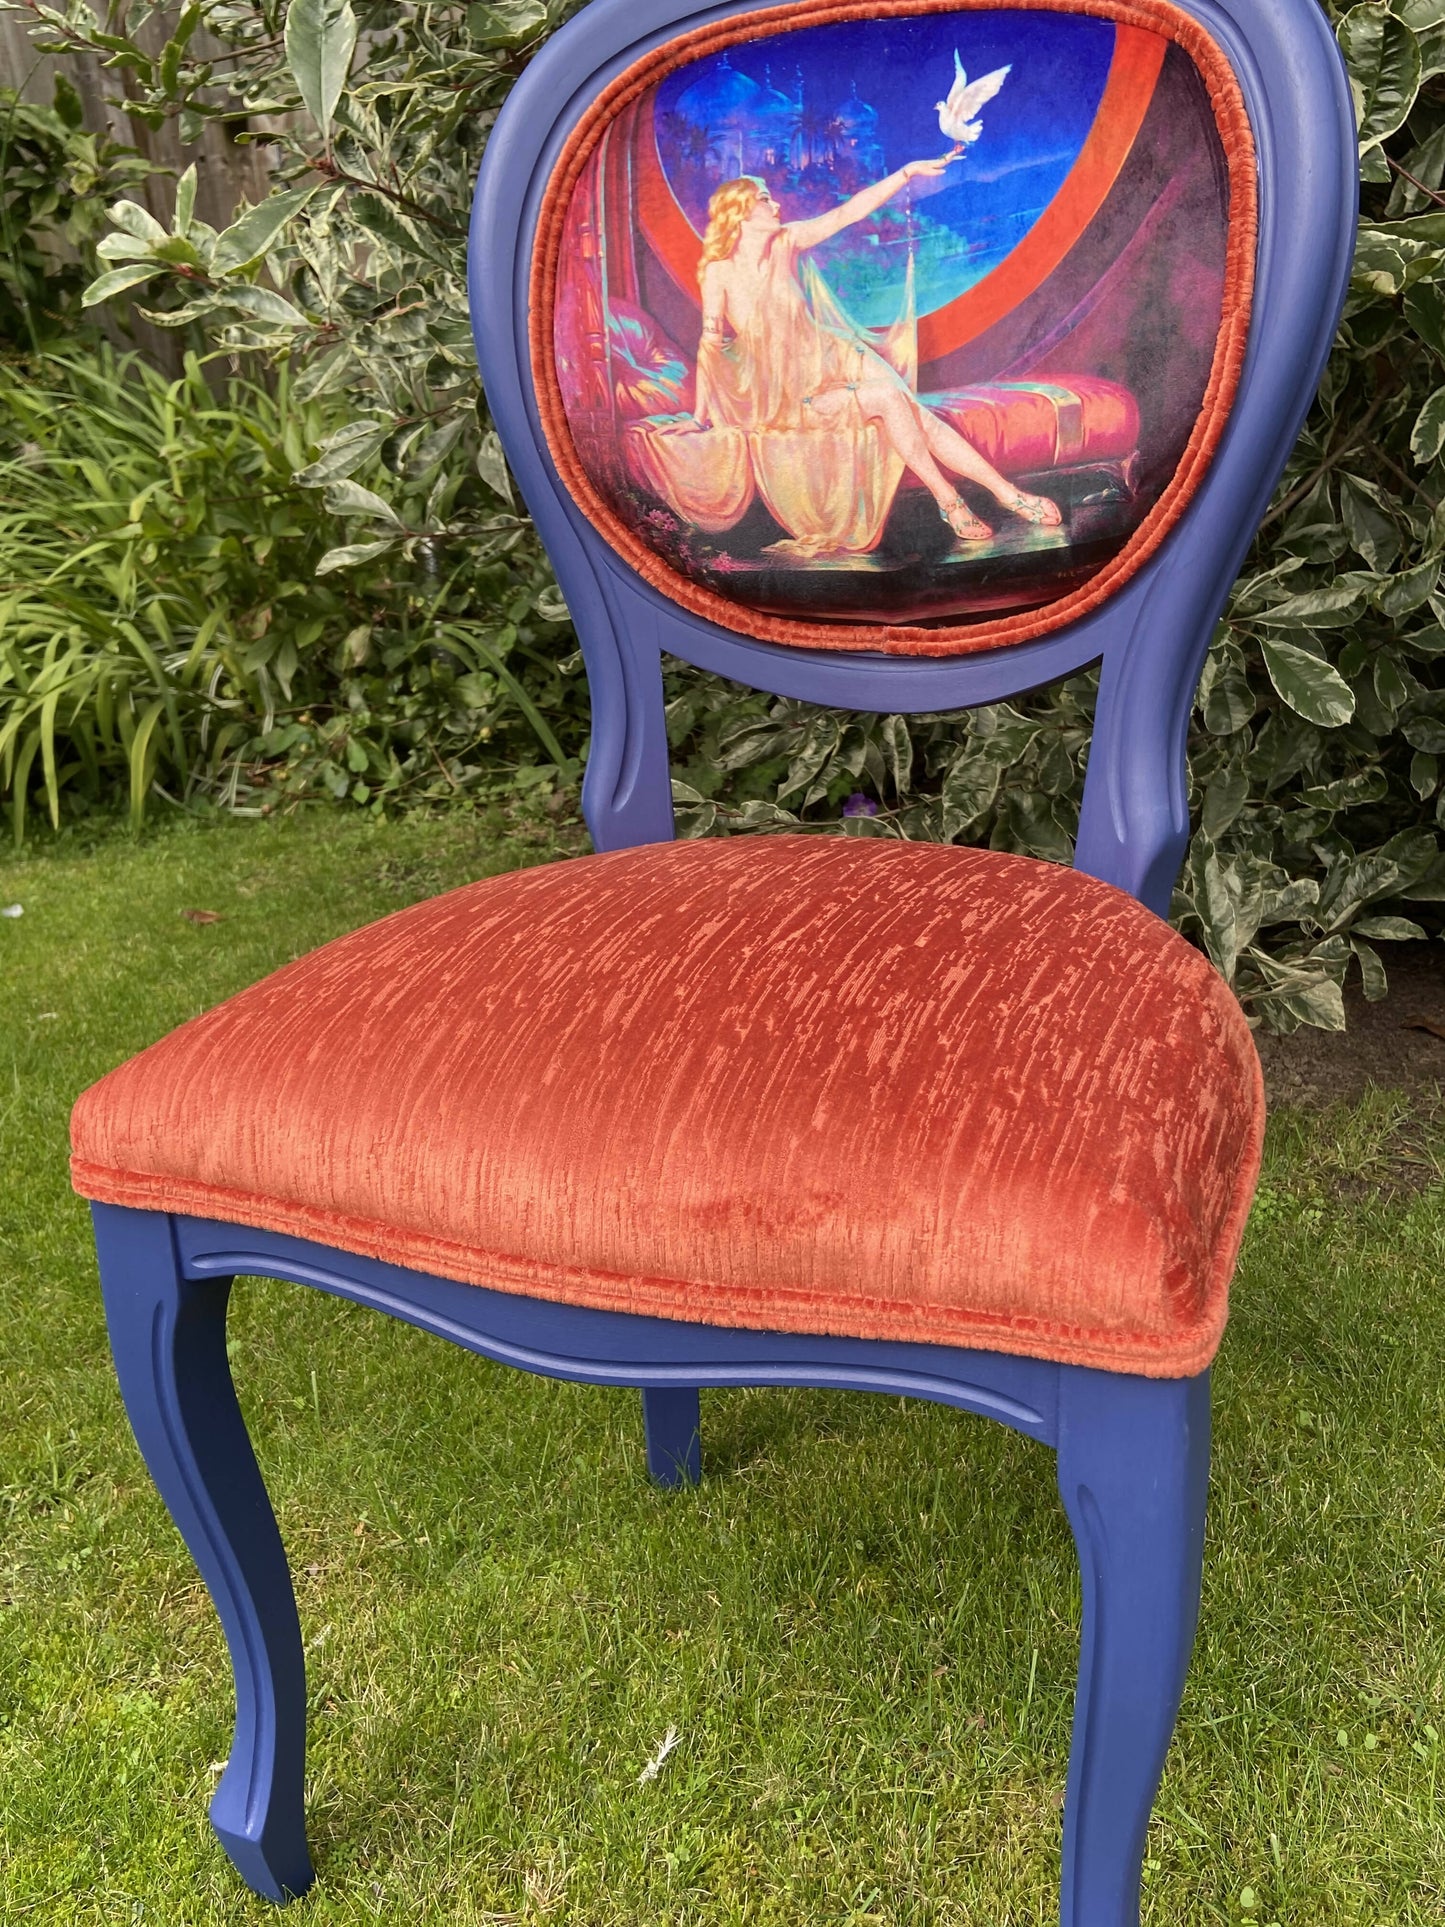 Glamorous Lady Chair